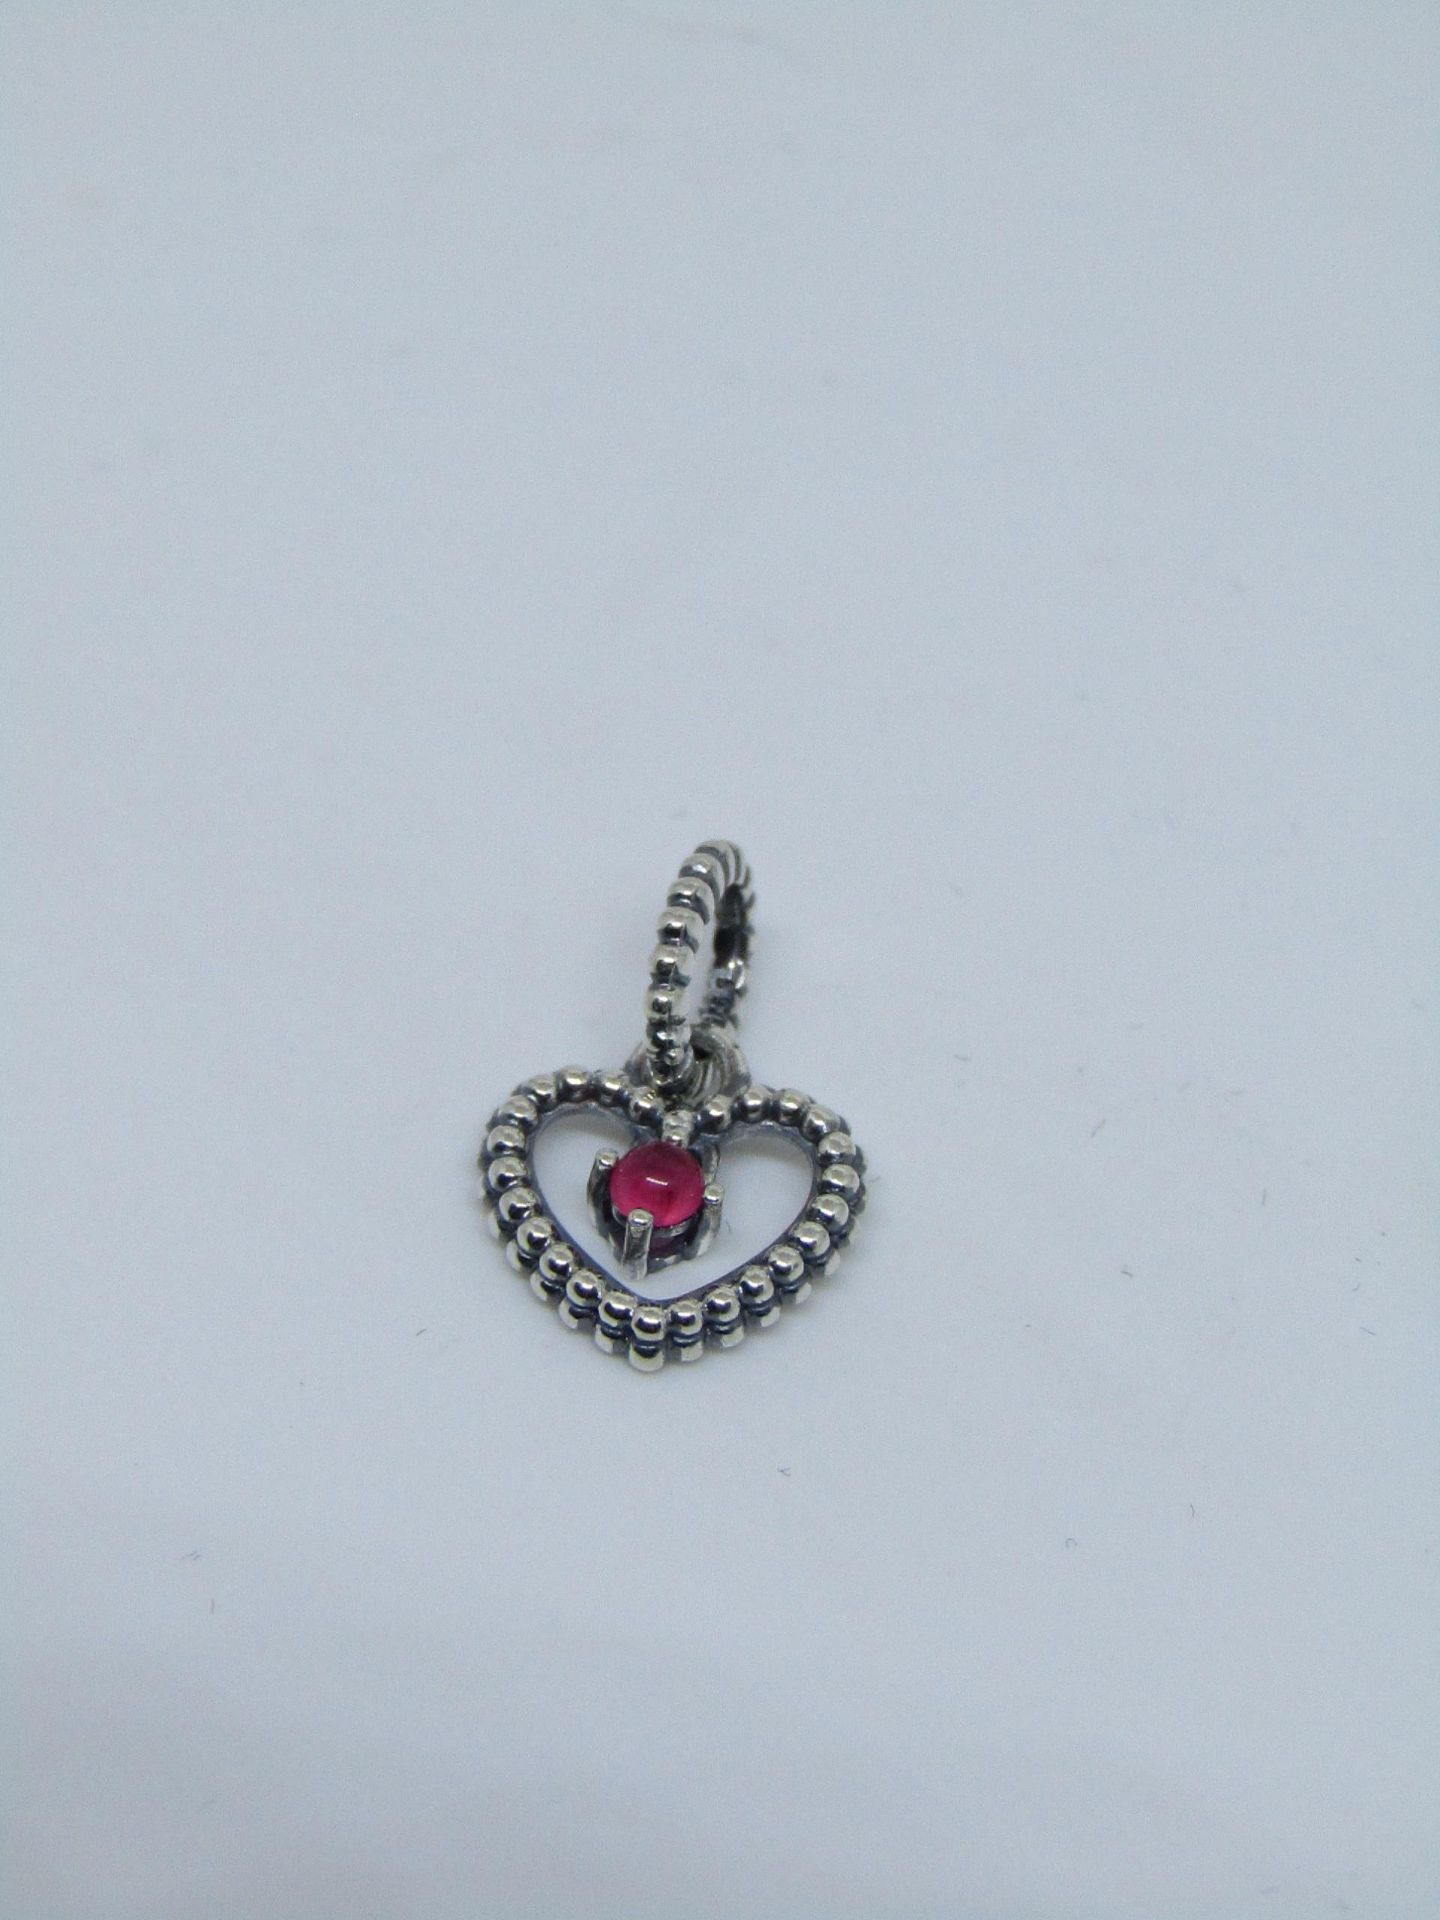 Pandora Birthstone necklace pendant, new with presentation bag.